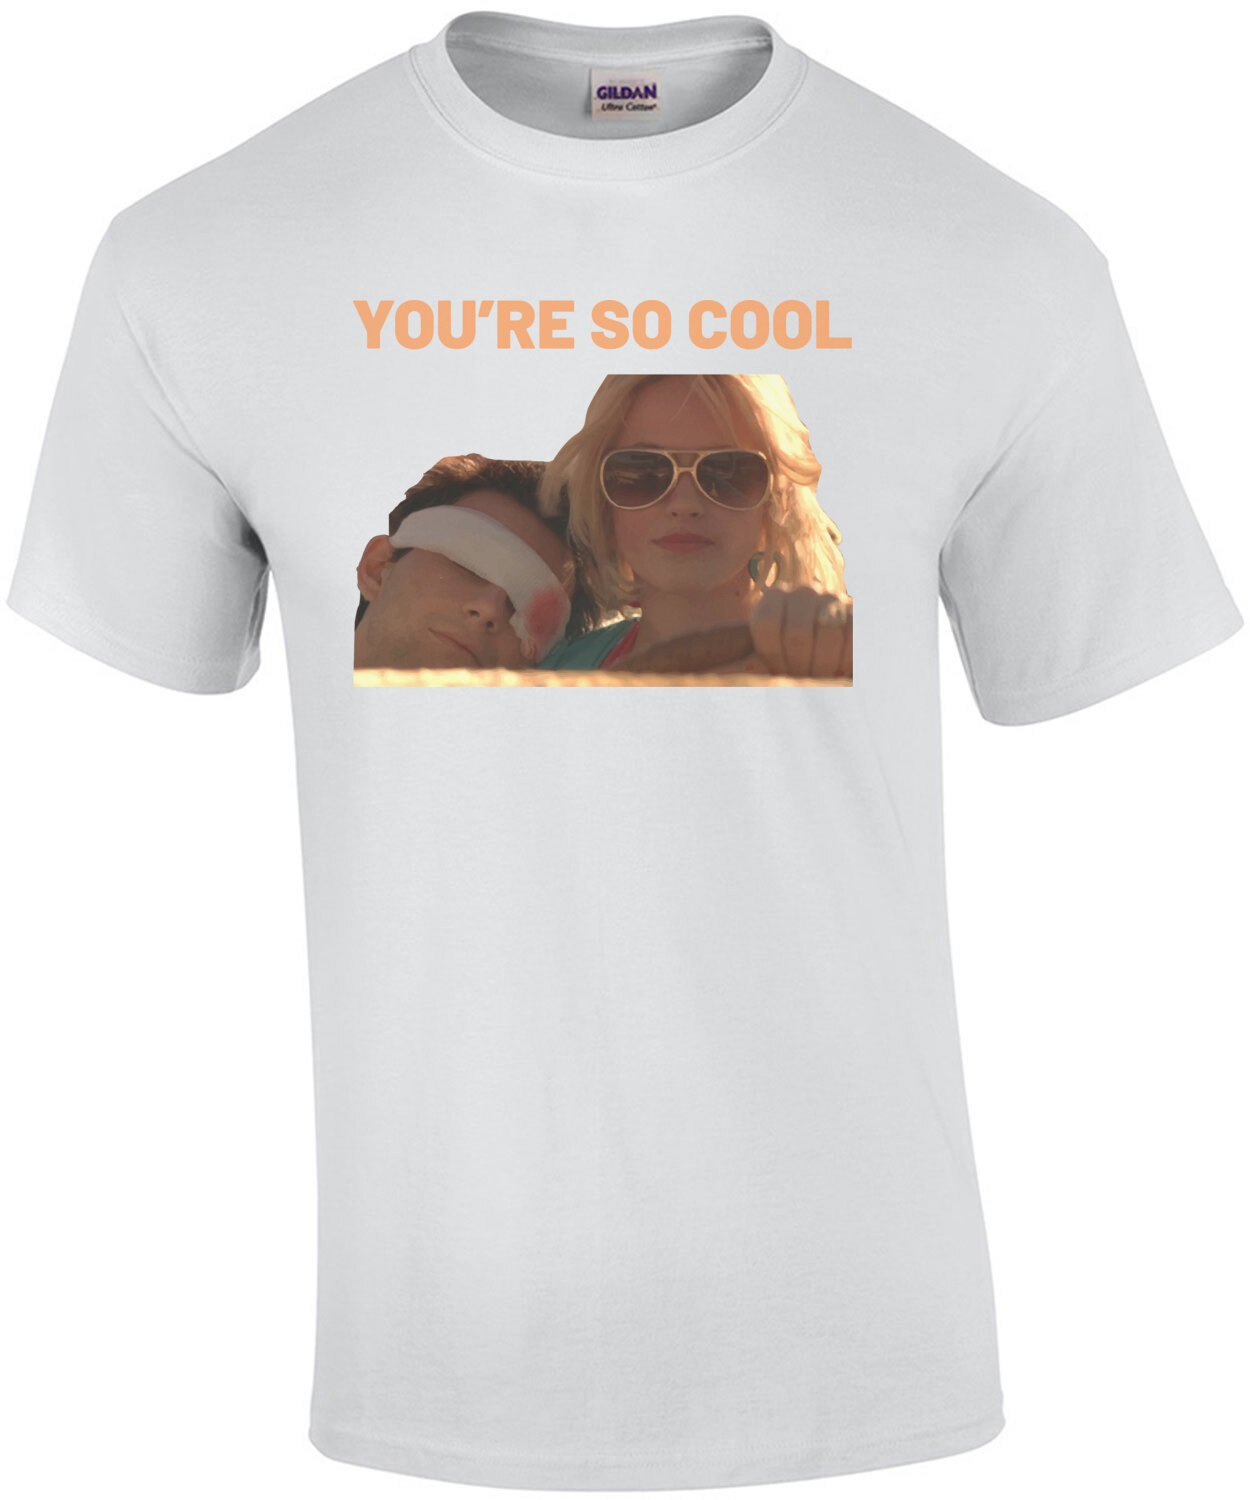 You're so cool - True Romance - 90's T-Shirt